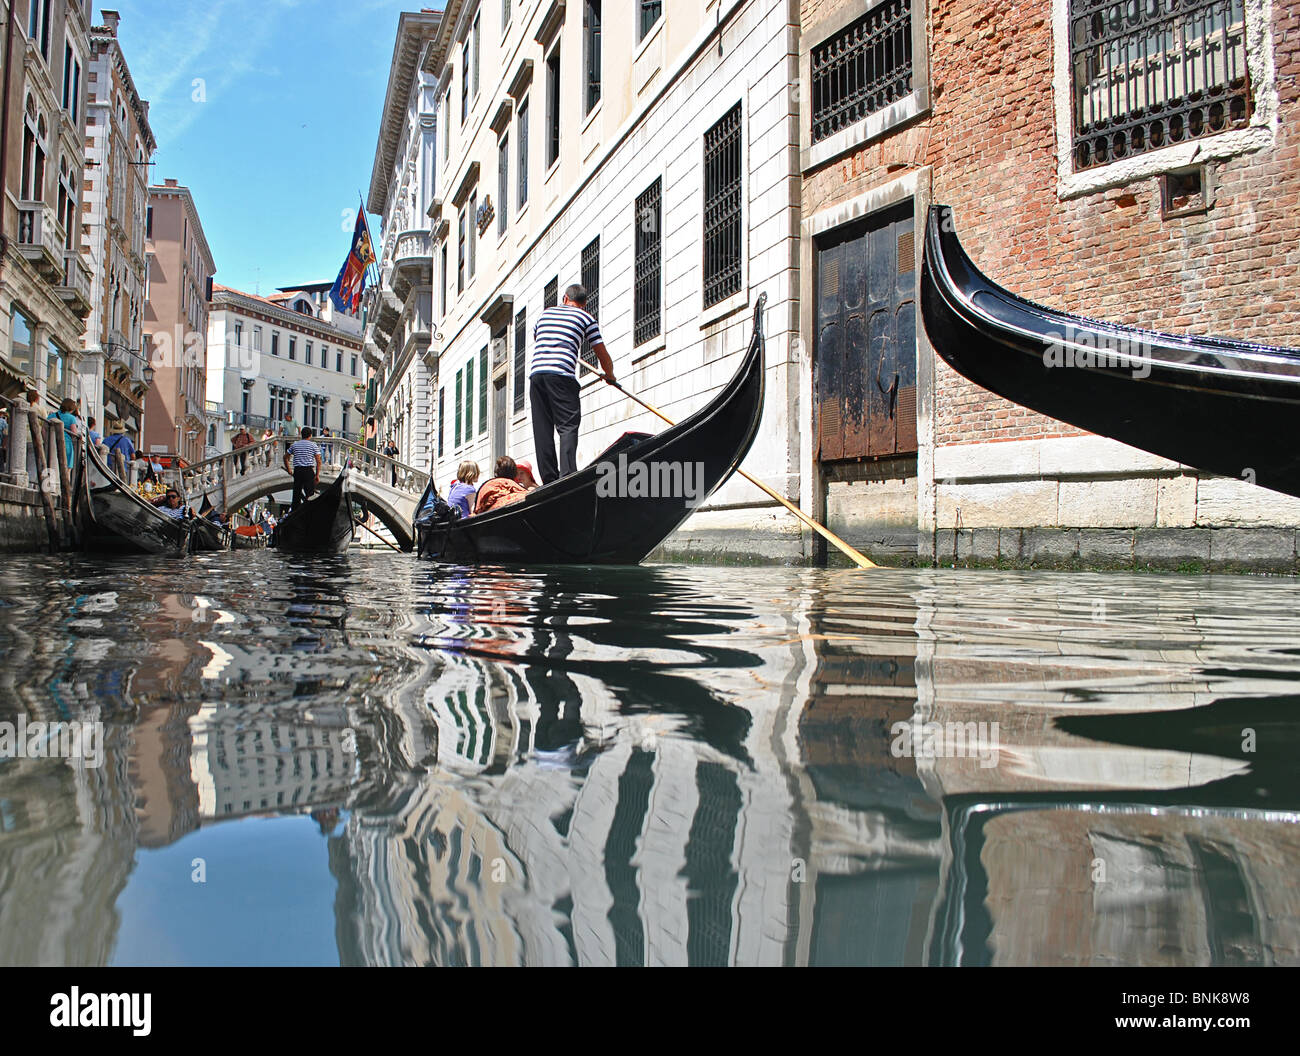 Gondeln in einem Kanal, Venedig, Italien Stockfoto